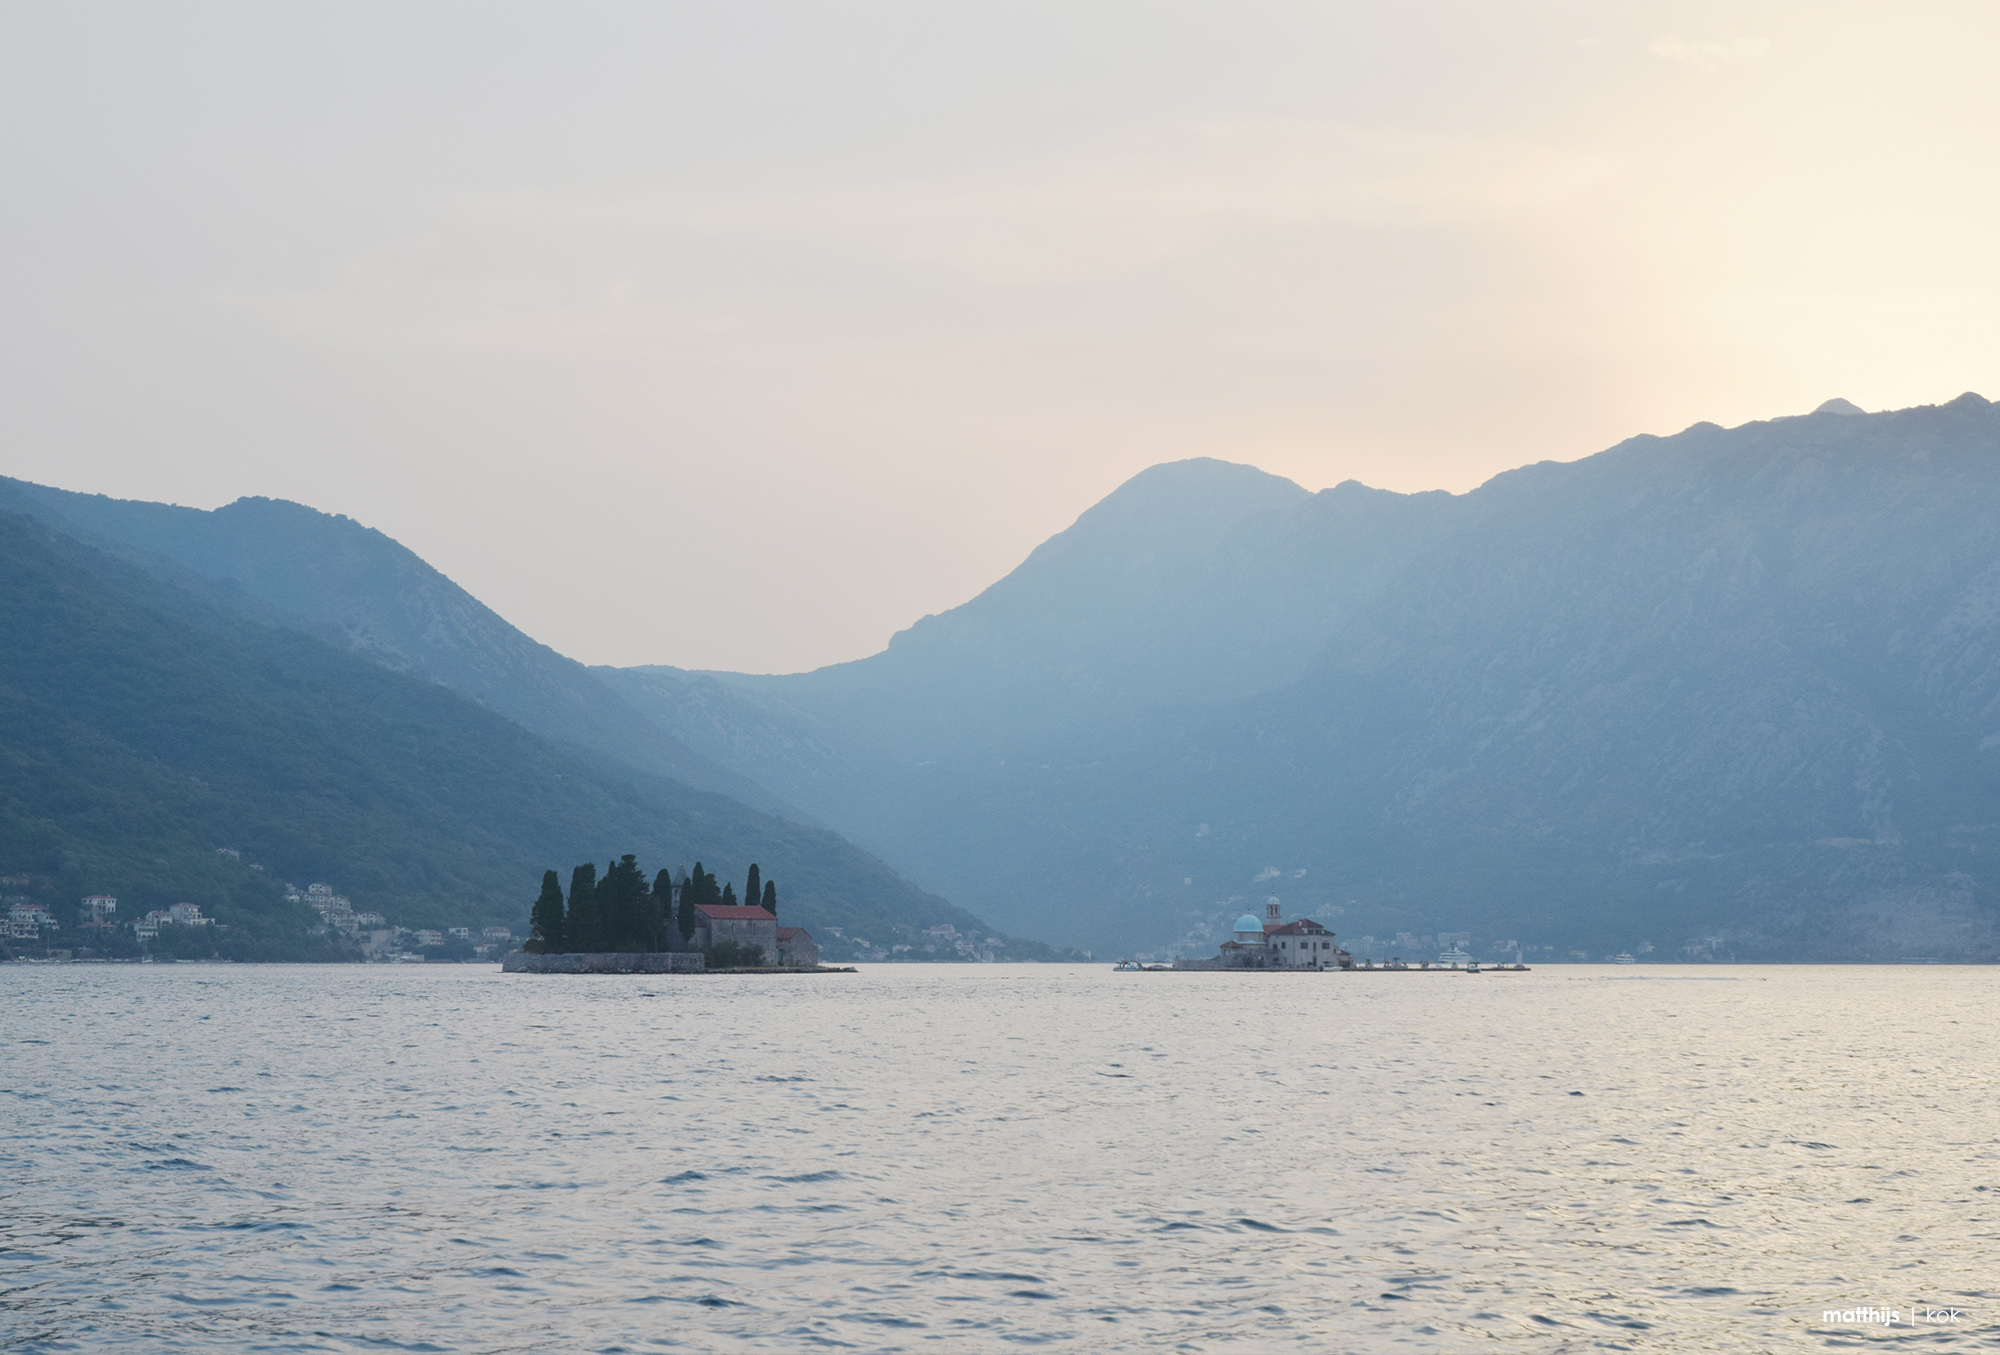 Bay of Kotor, Montenegro | Photo by Matthijs Kok